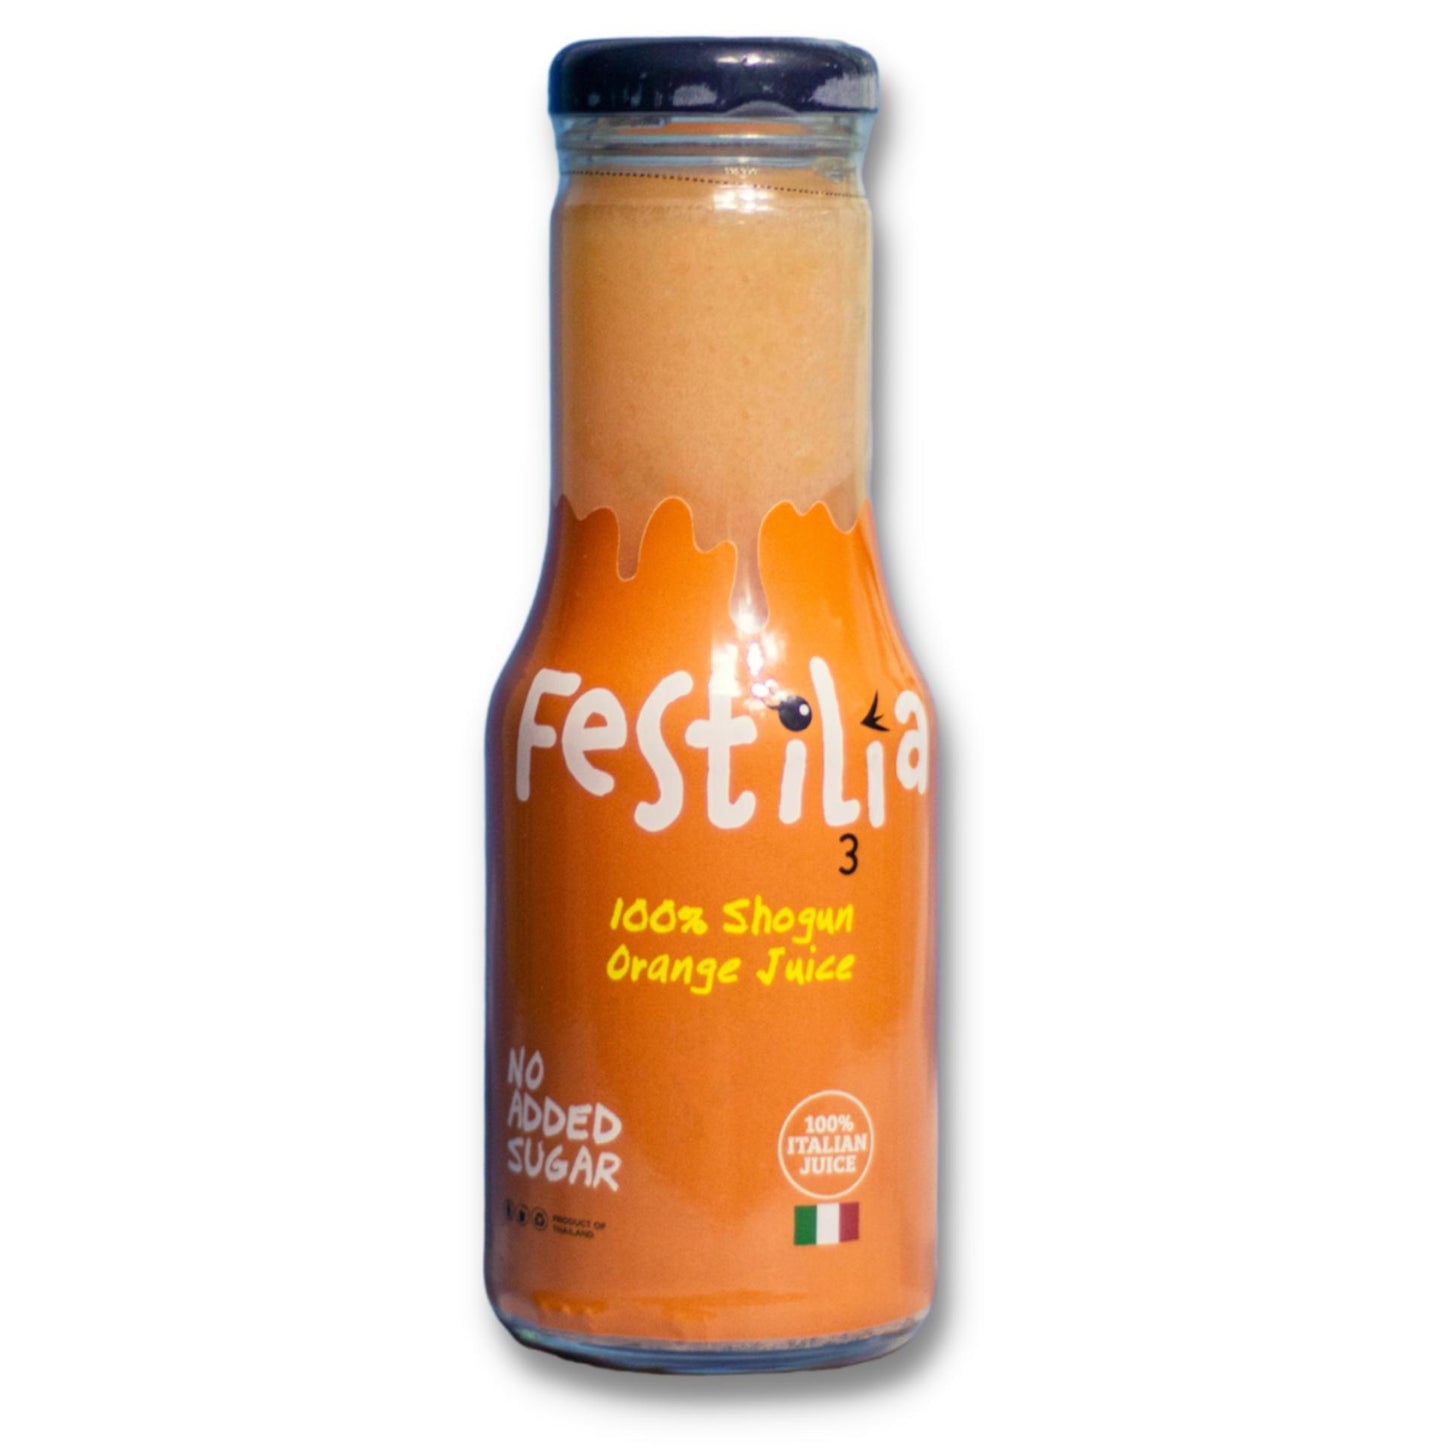 Festilia 100% Shogun Orange Juice